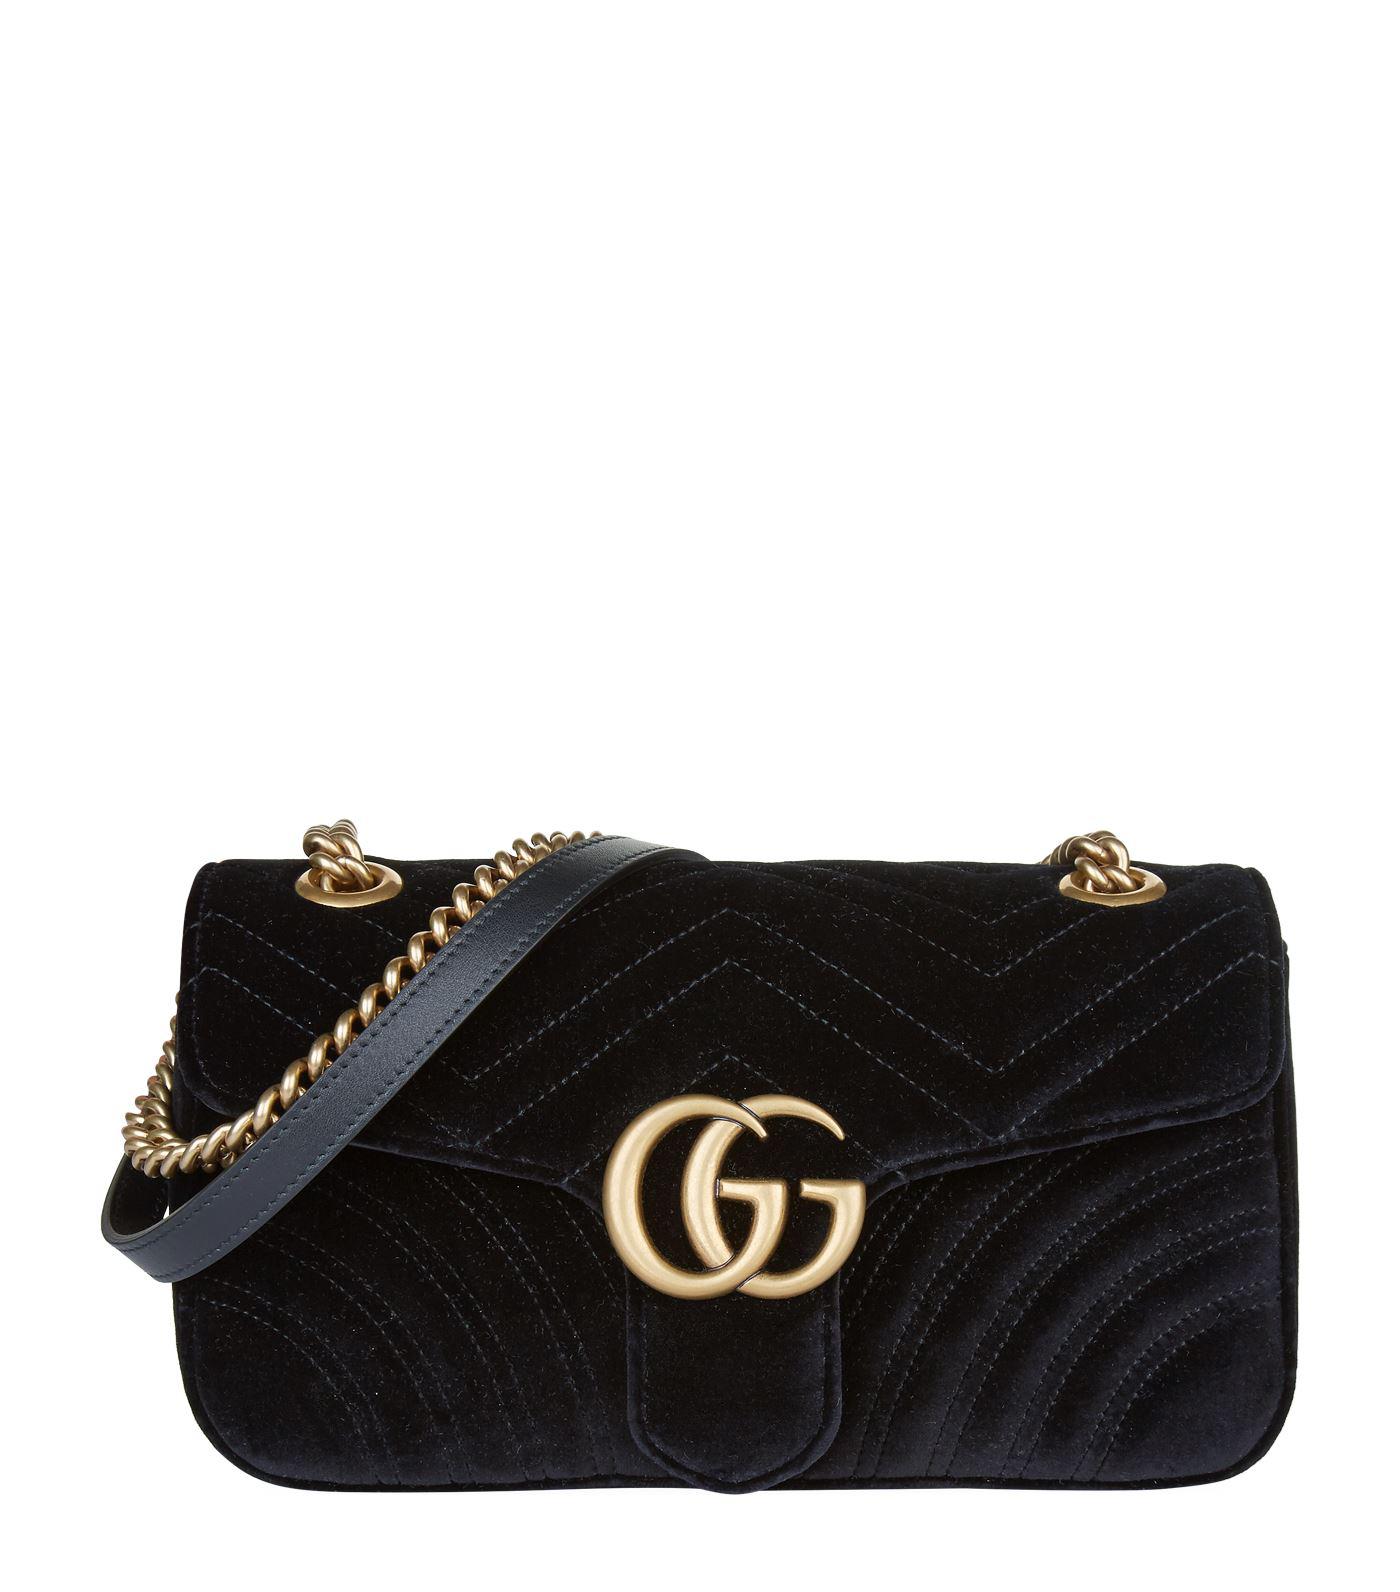 Gucci Small Velvet Marmont Matelass Shoulder Bag in Black - Lyst